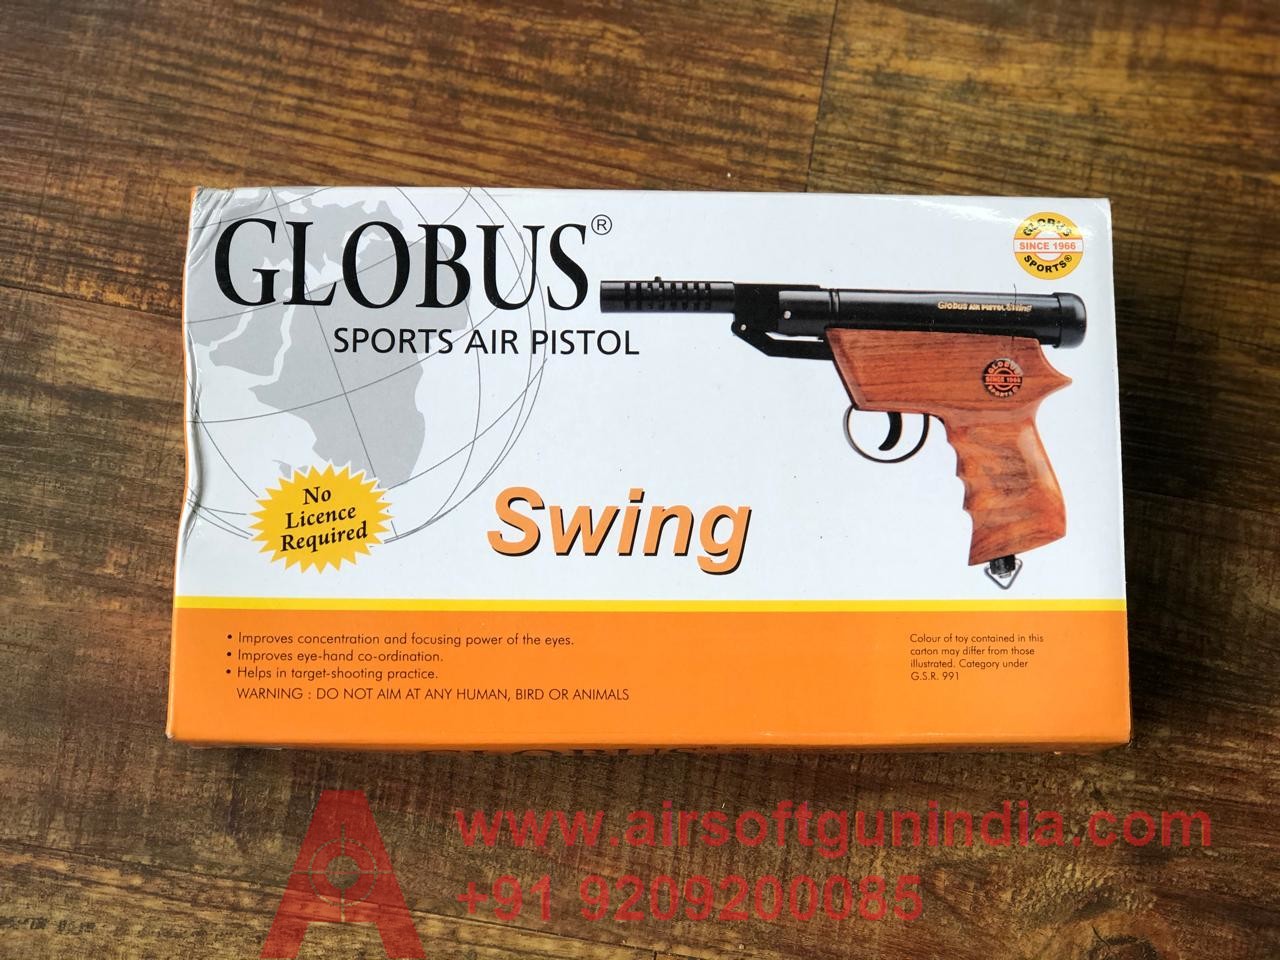 Globus Swing Wood Sport Single-Shot .177 Caliber / 4.5 Mm Indian Air Pistol By Airsoft Gun India.